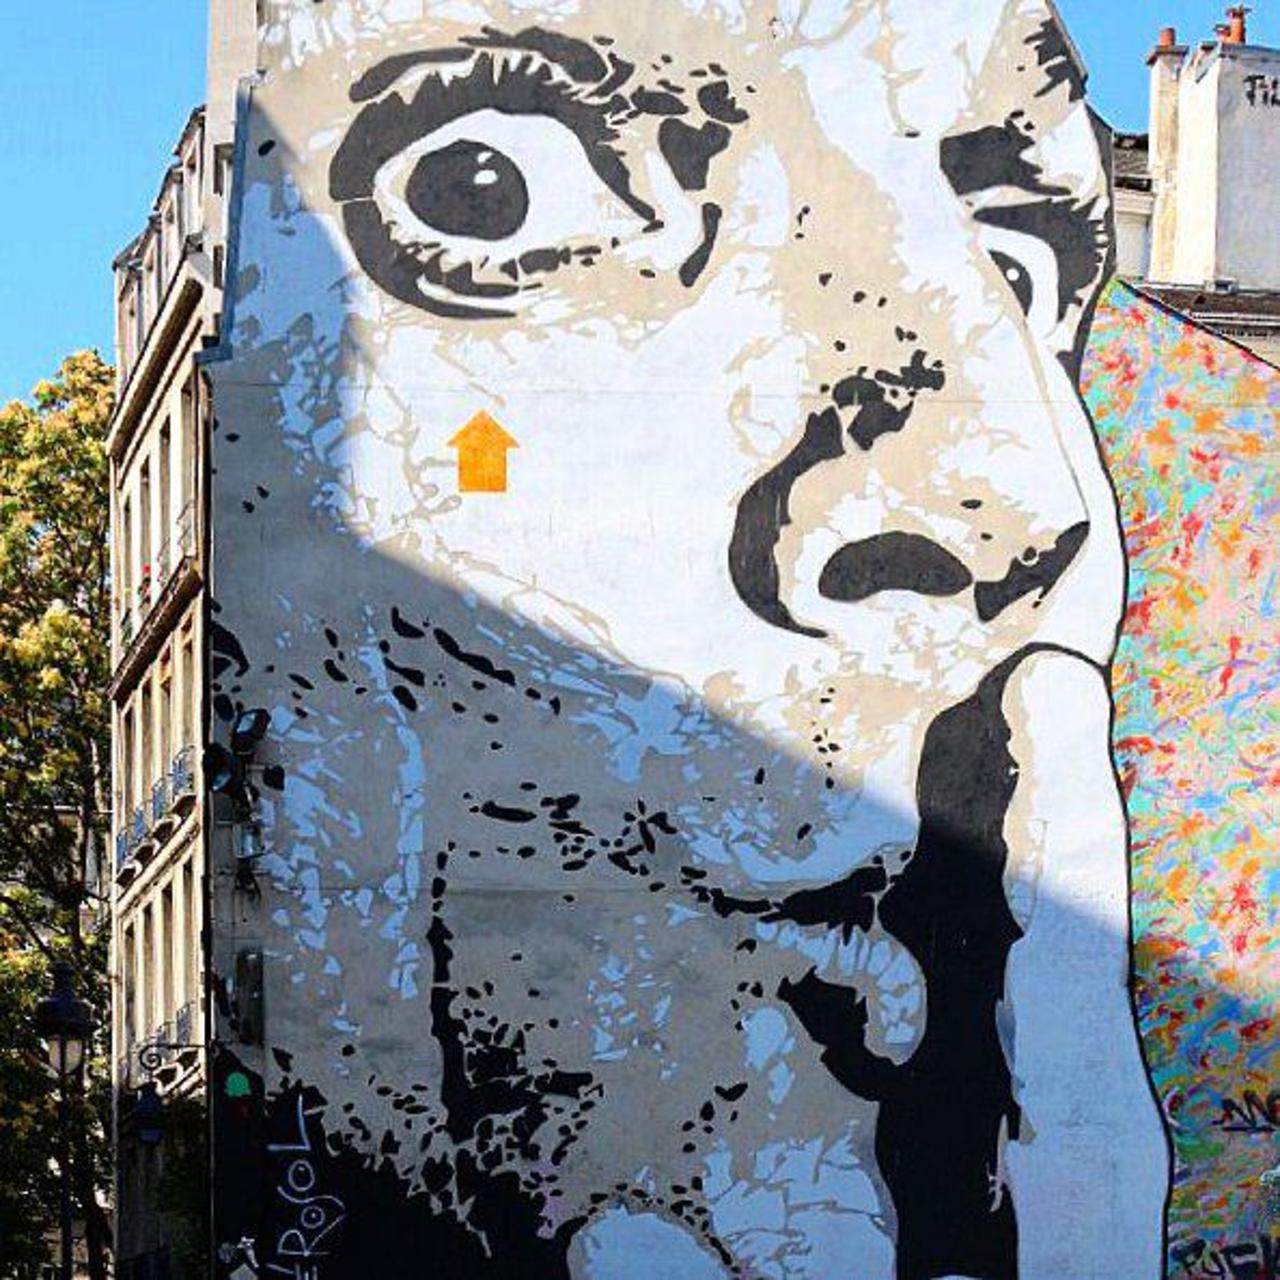 #Paris #graffiti photo by @jpoesse http://ift.tt/1j5Pupd #StreetArt http://t.co/DHTntu8Oo0